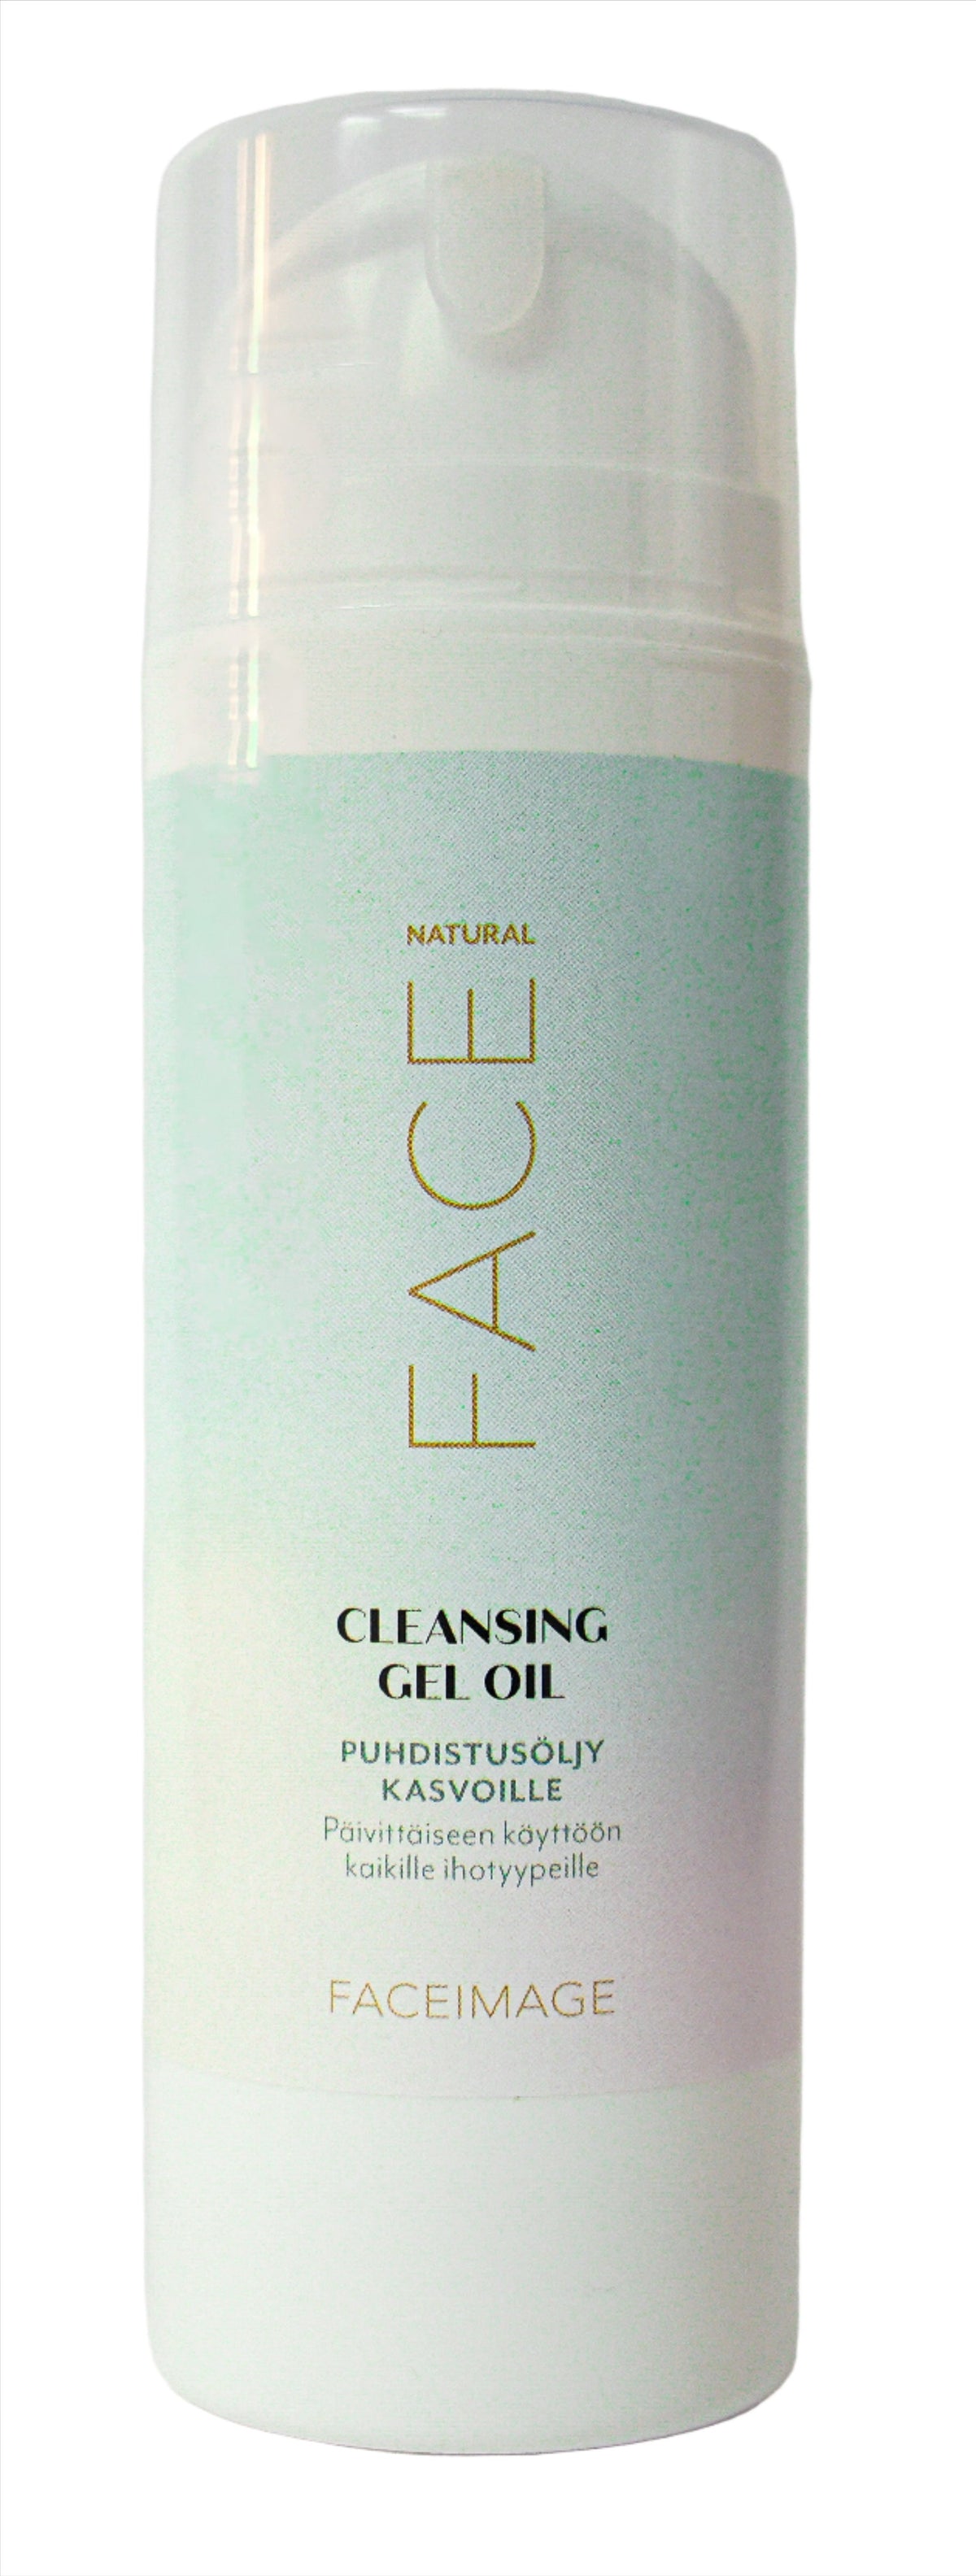 Faceimage Cleansing Gel Oil - Puhdistusöljy Kasvoille 150 ml